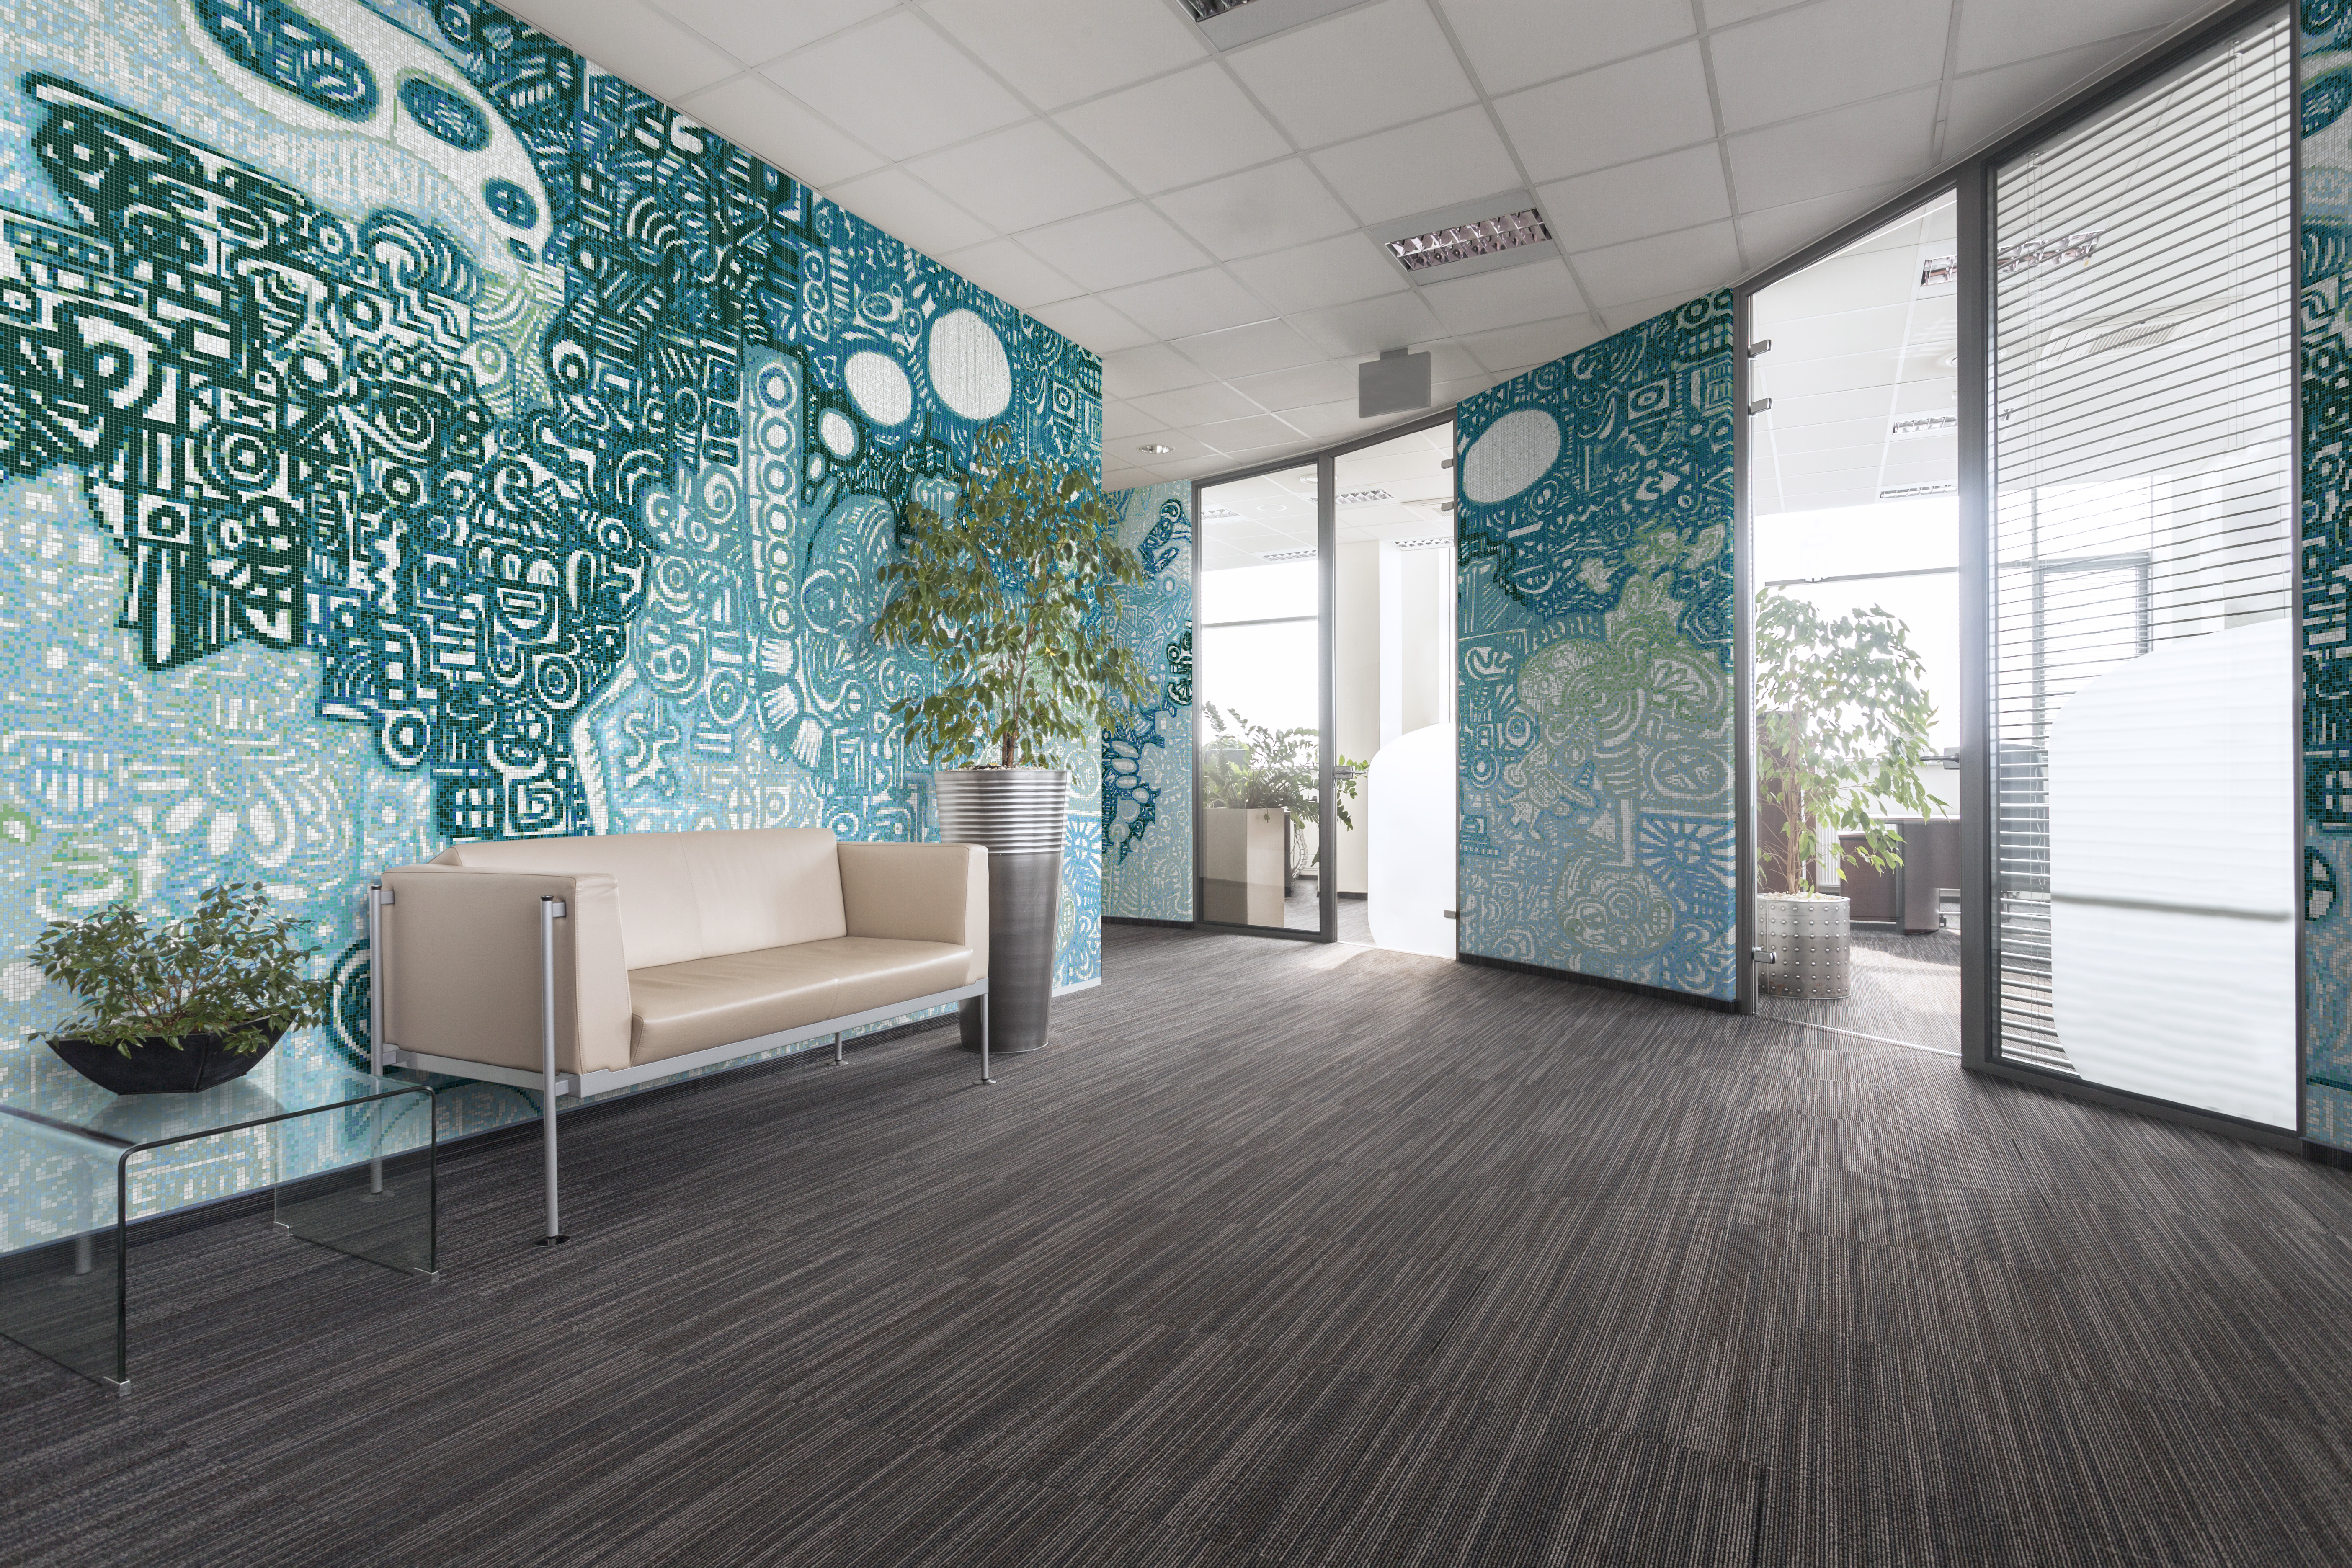 artaic-office-lobby-turquoise-mosaic-tile-mural-0301101